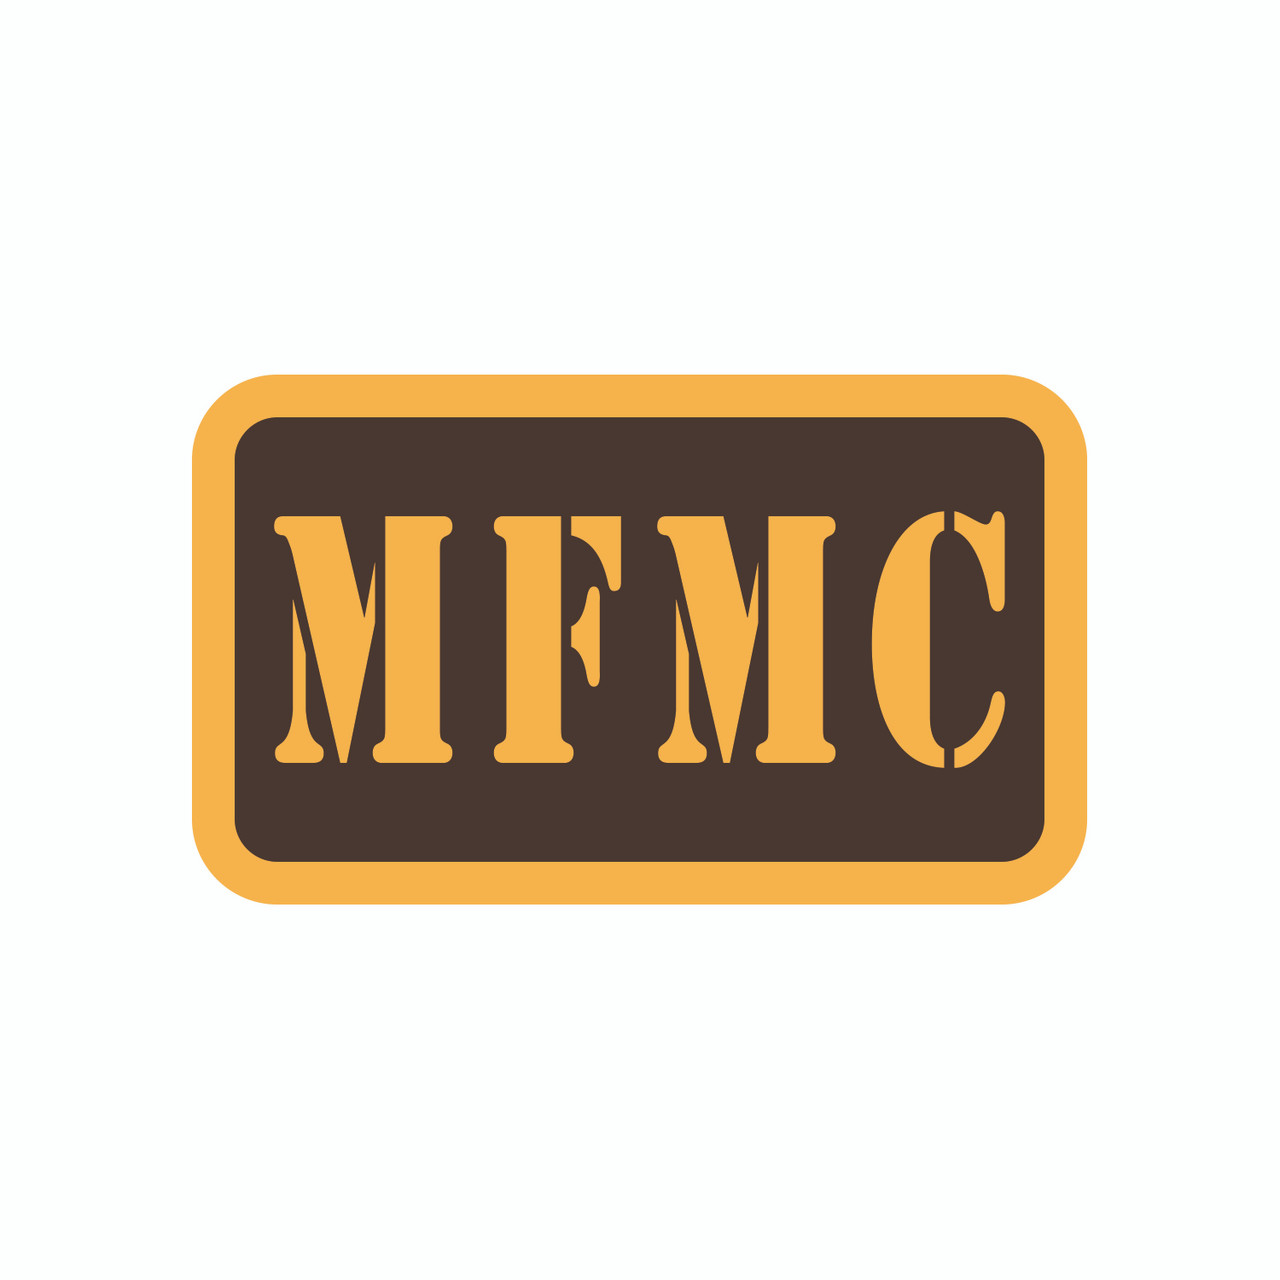 MFMC (Men of Fire) Buckle (RESTRICTED)